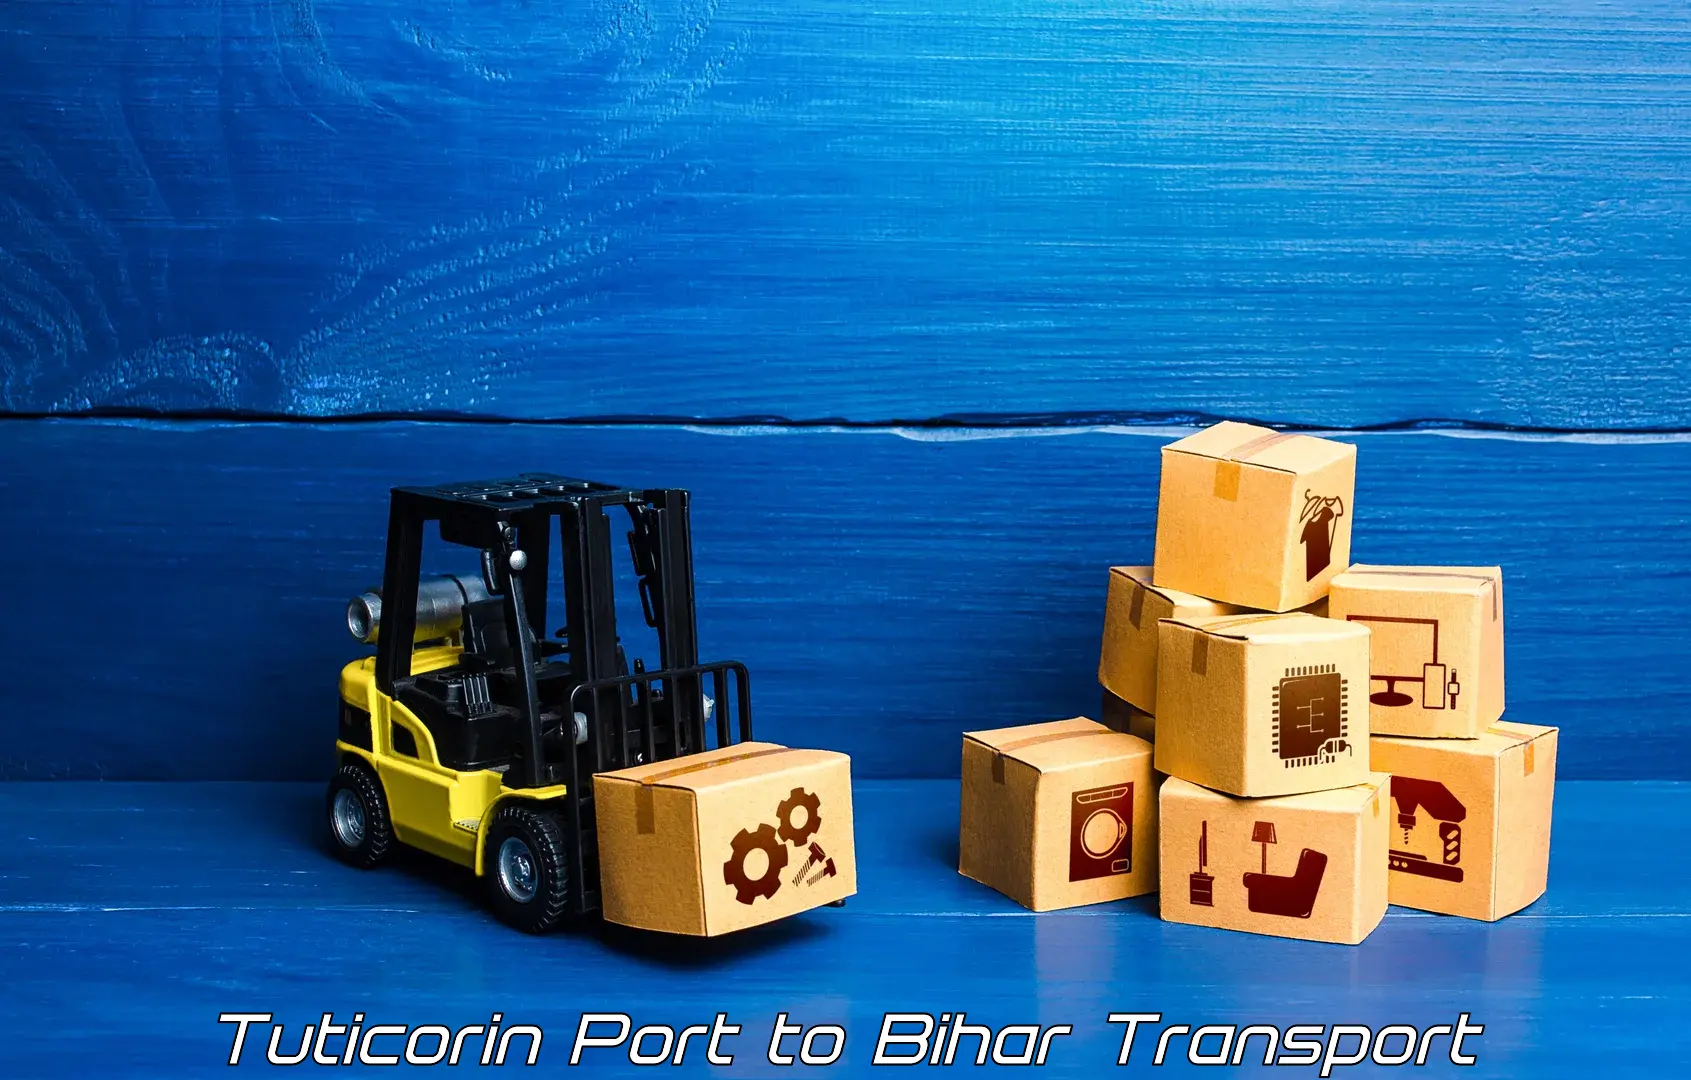 Online transport service Tuticorin Port to Bihar